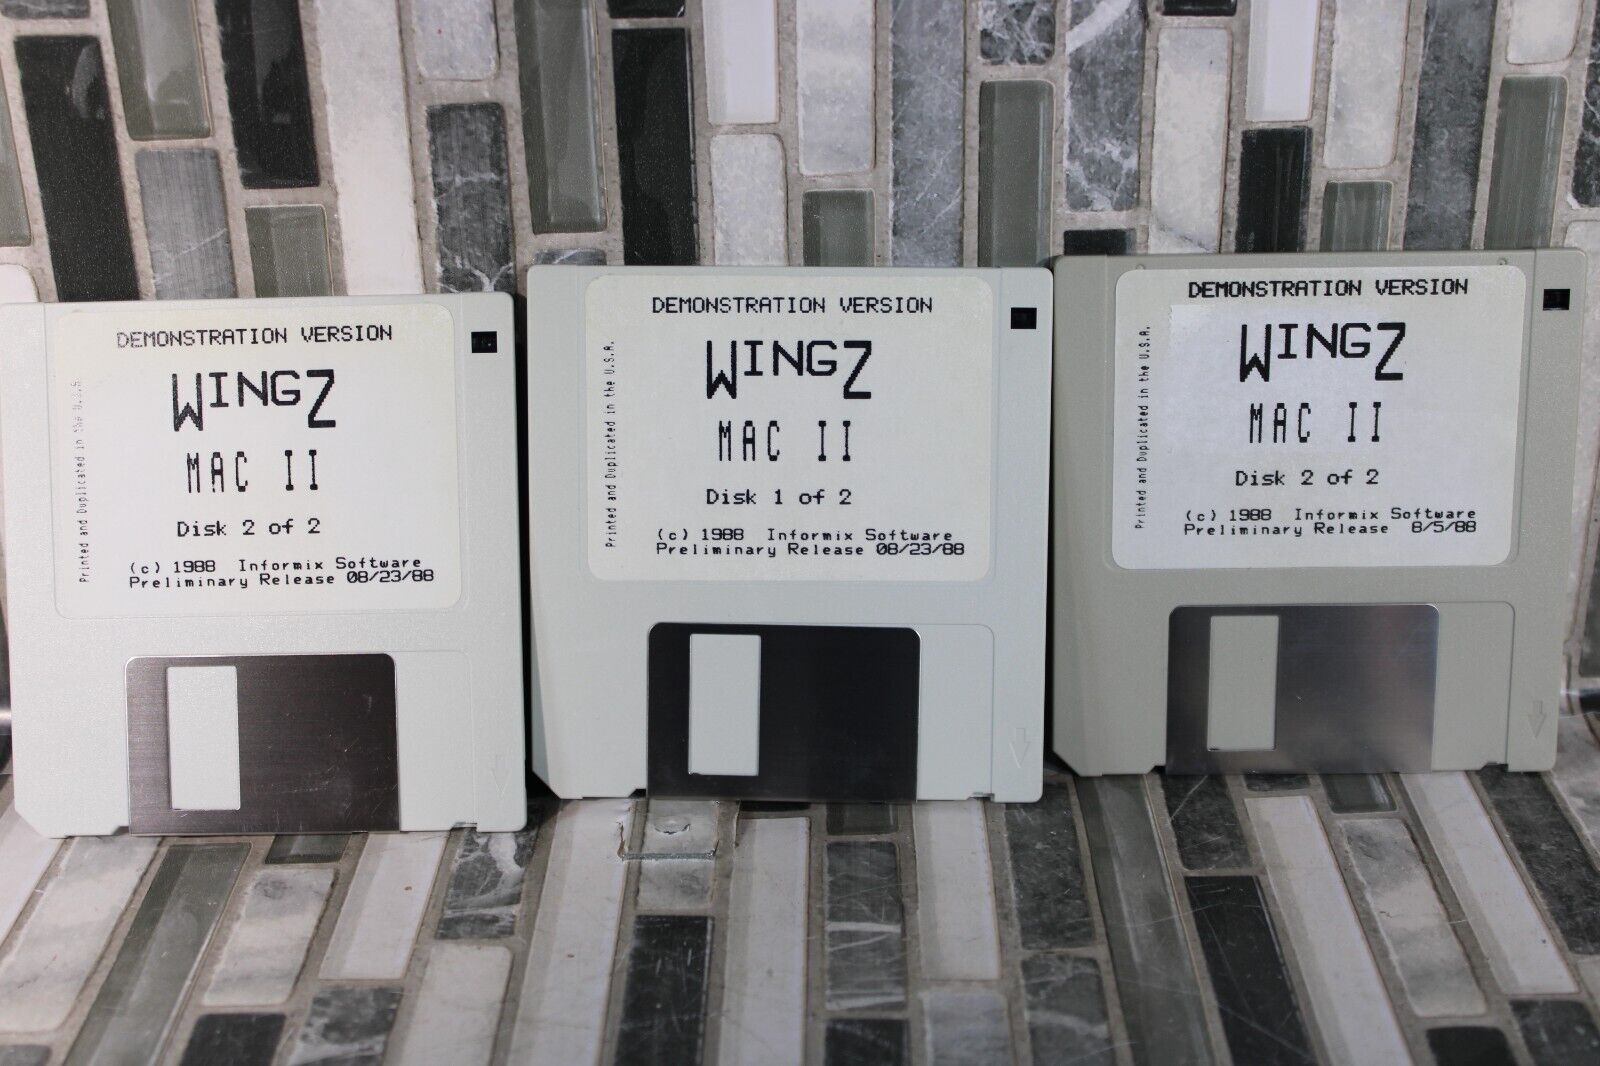 Lot of 3 Vintage Apple Demonstration Copy of WingZ II Floppy Disks